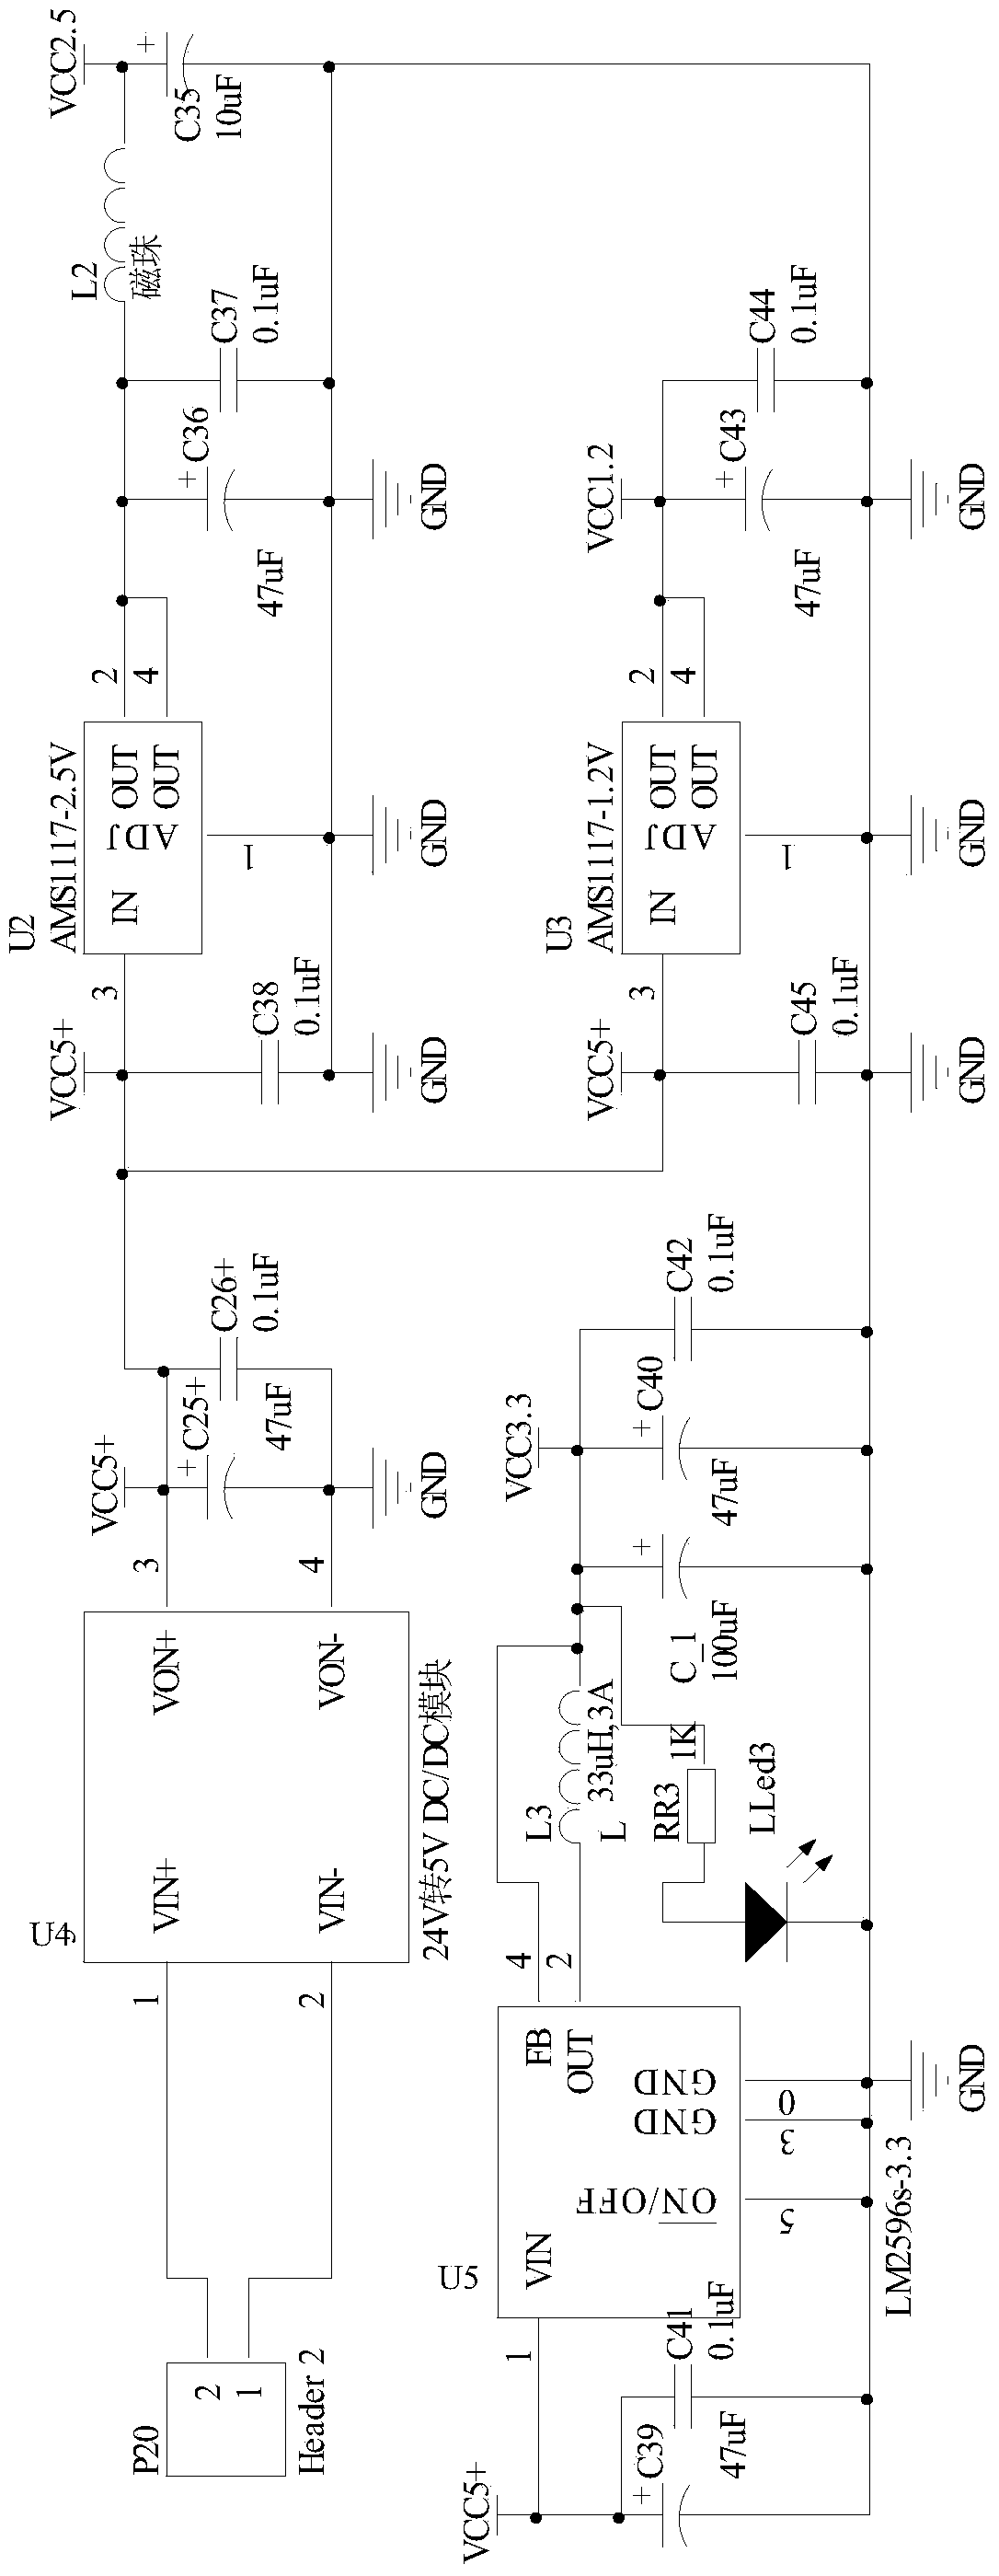 FPGA-based ultrahigh-speed industrial controller